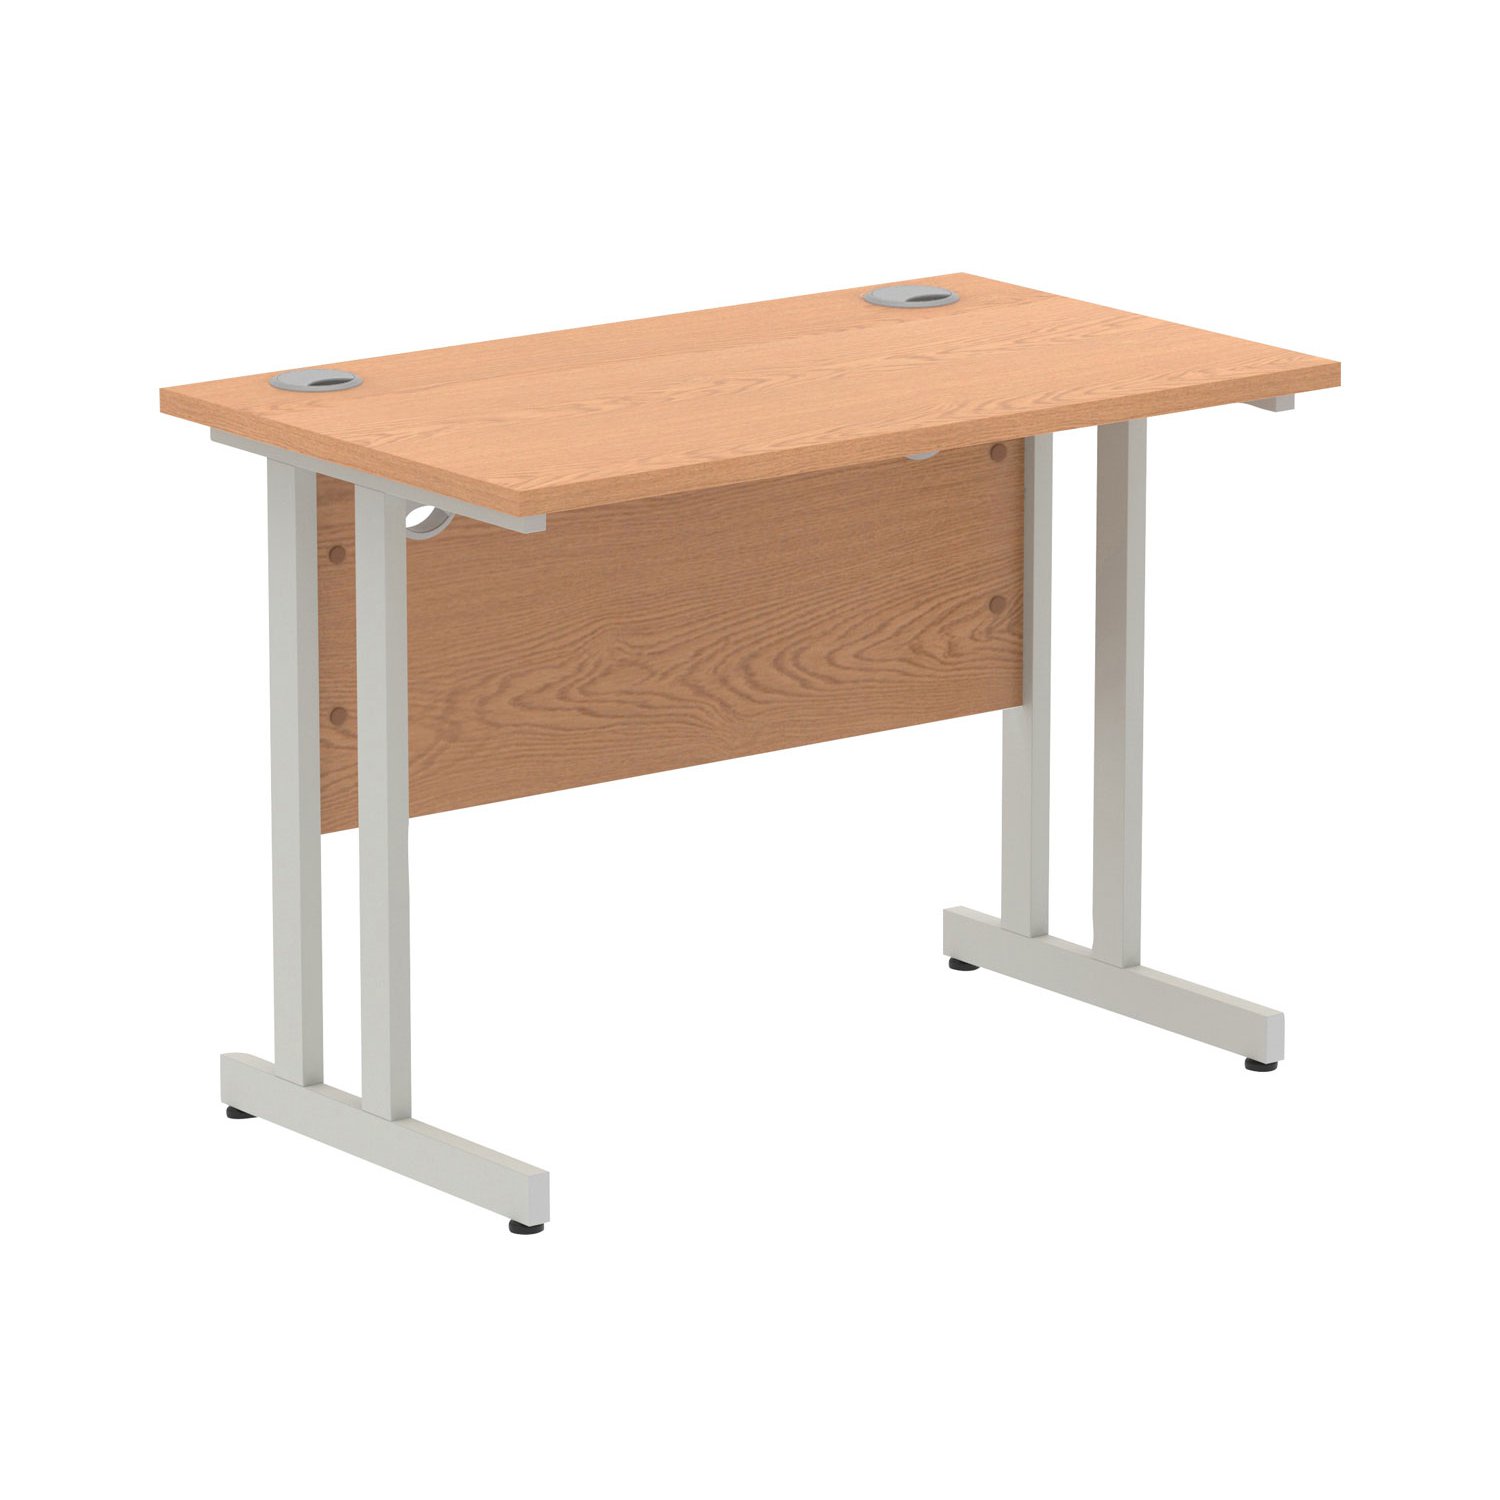 Vitali C-Leg Narrow Rectangular Desk (Silver Legs), 100wx60dx73h (cm), Oak